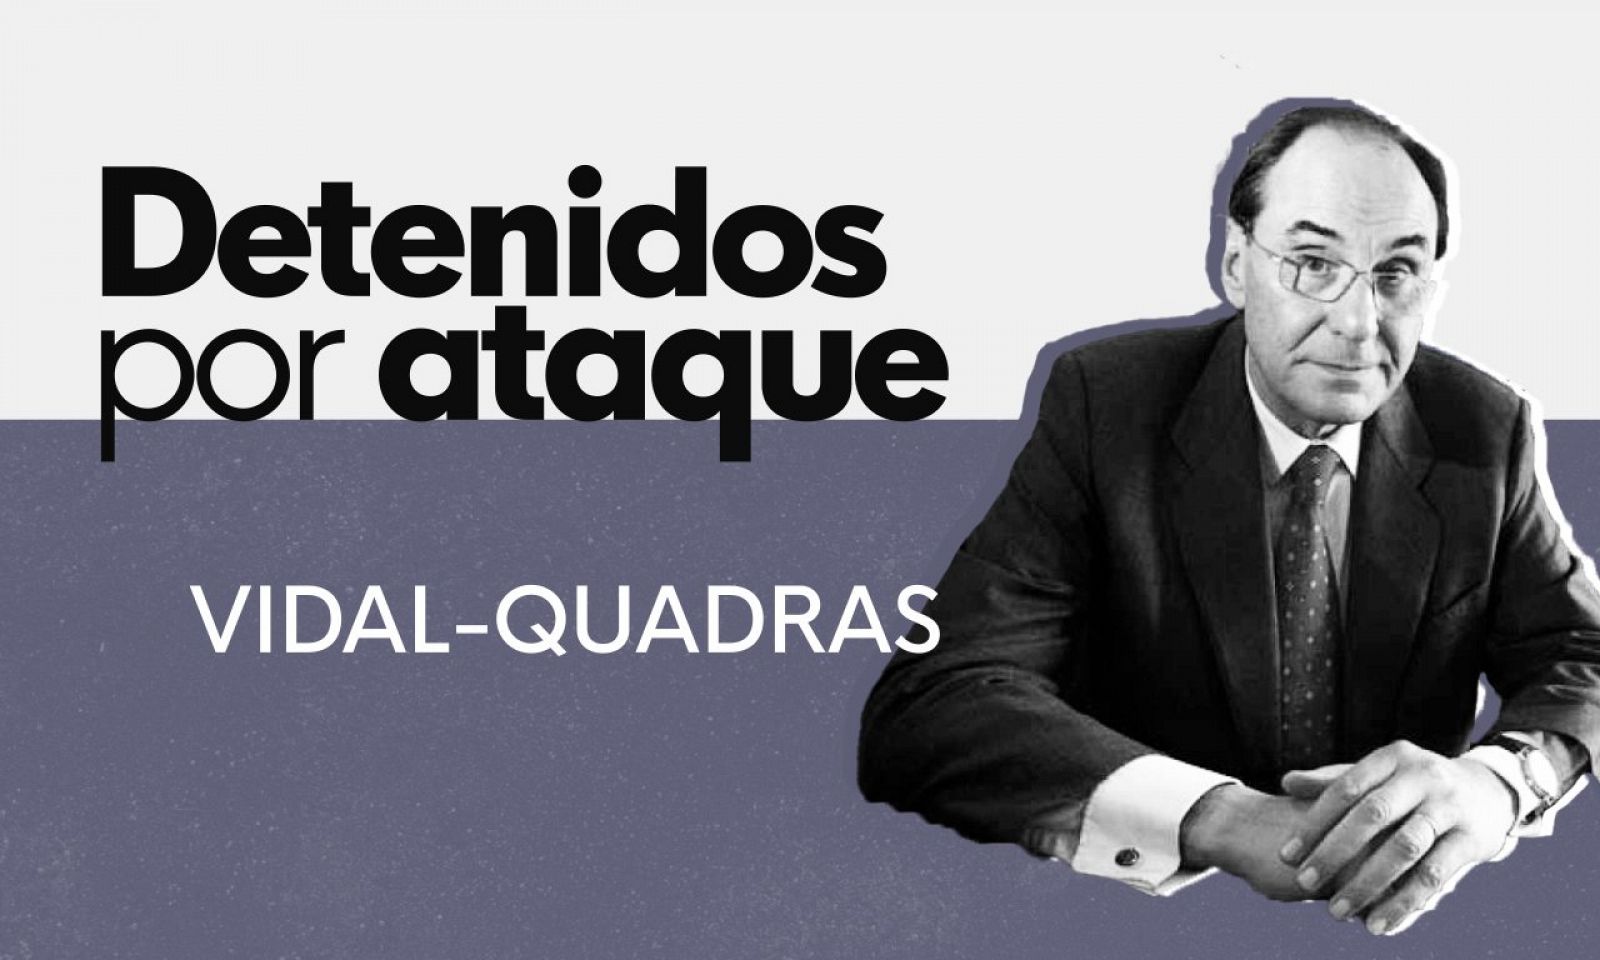 Ataque Vidal-Quadras, tres detenidos